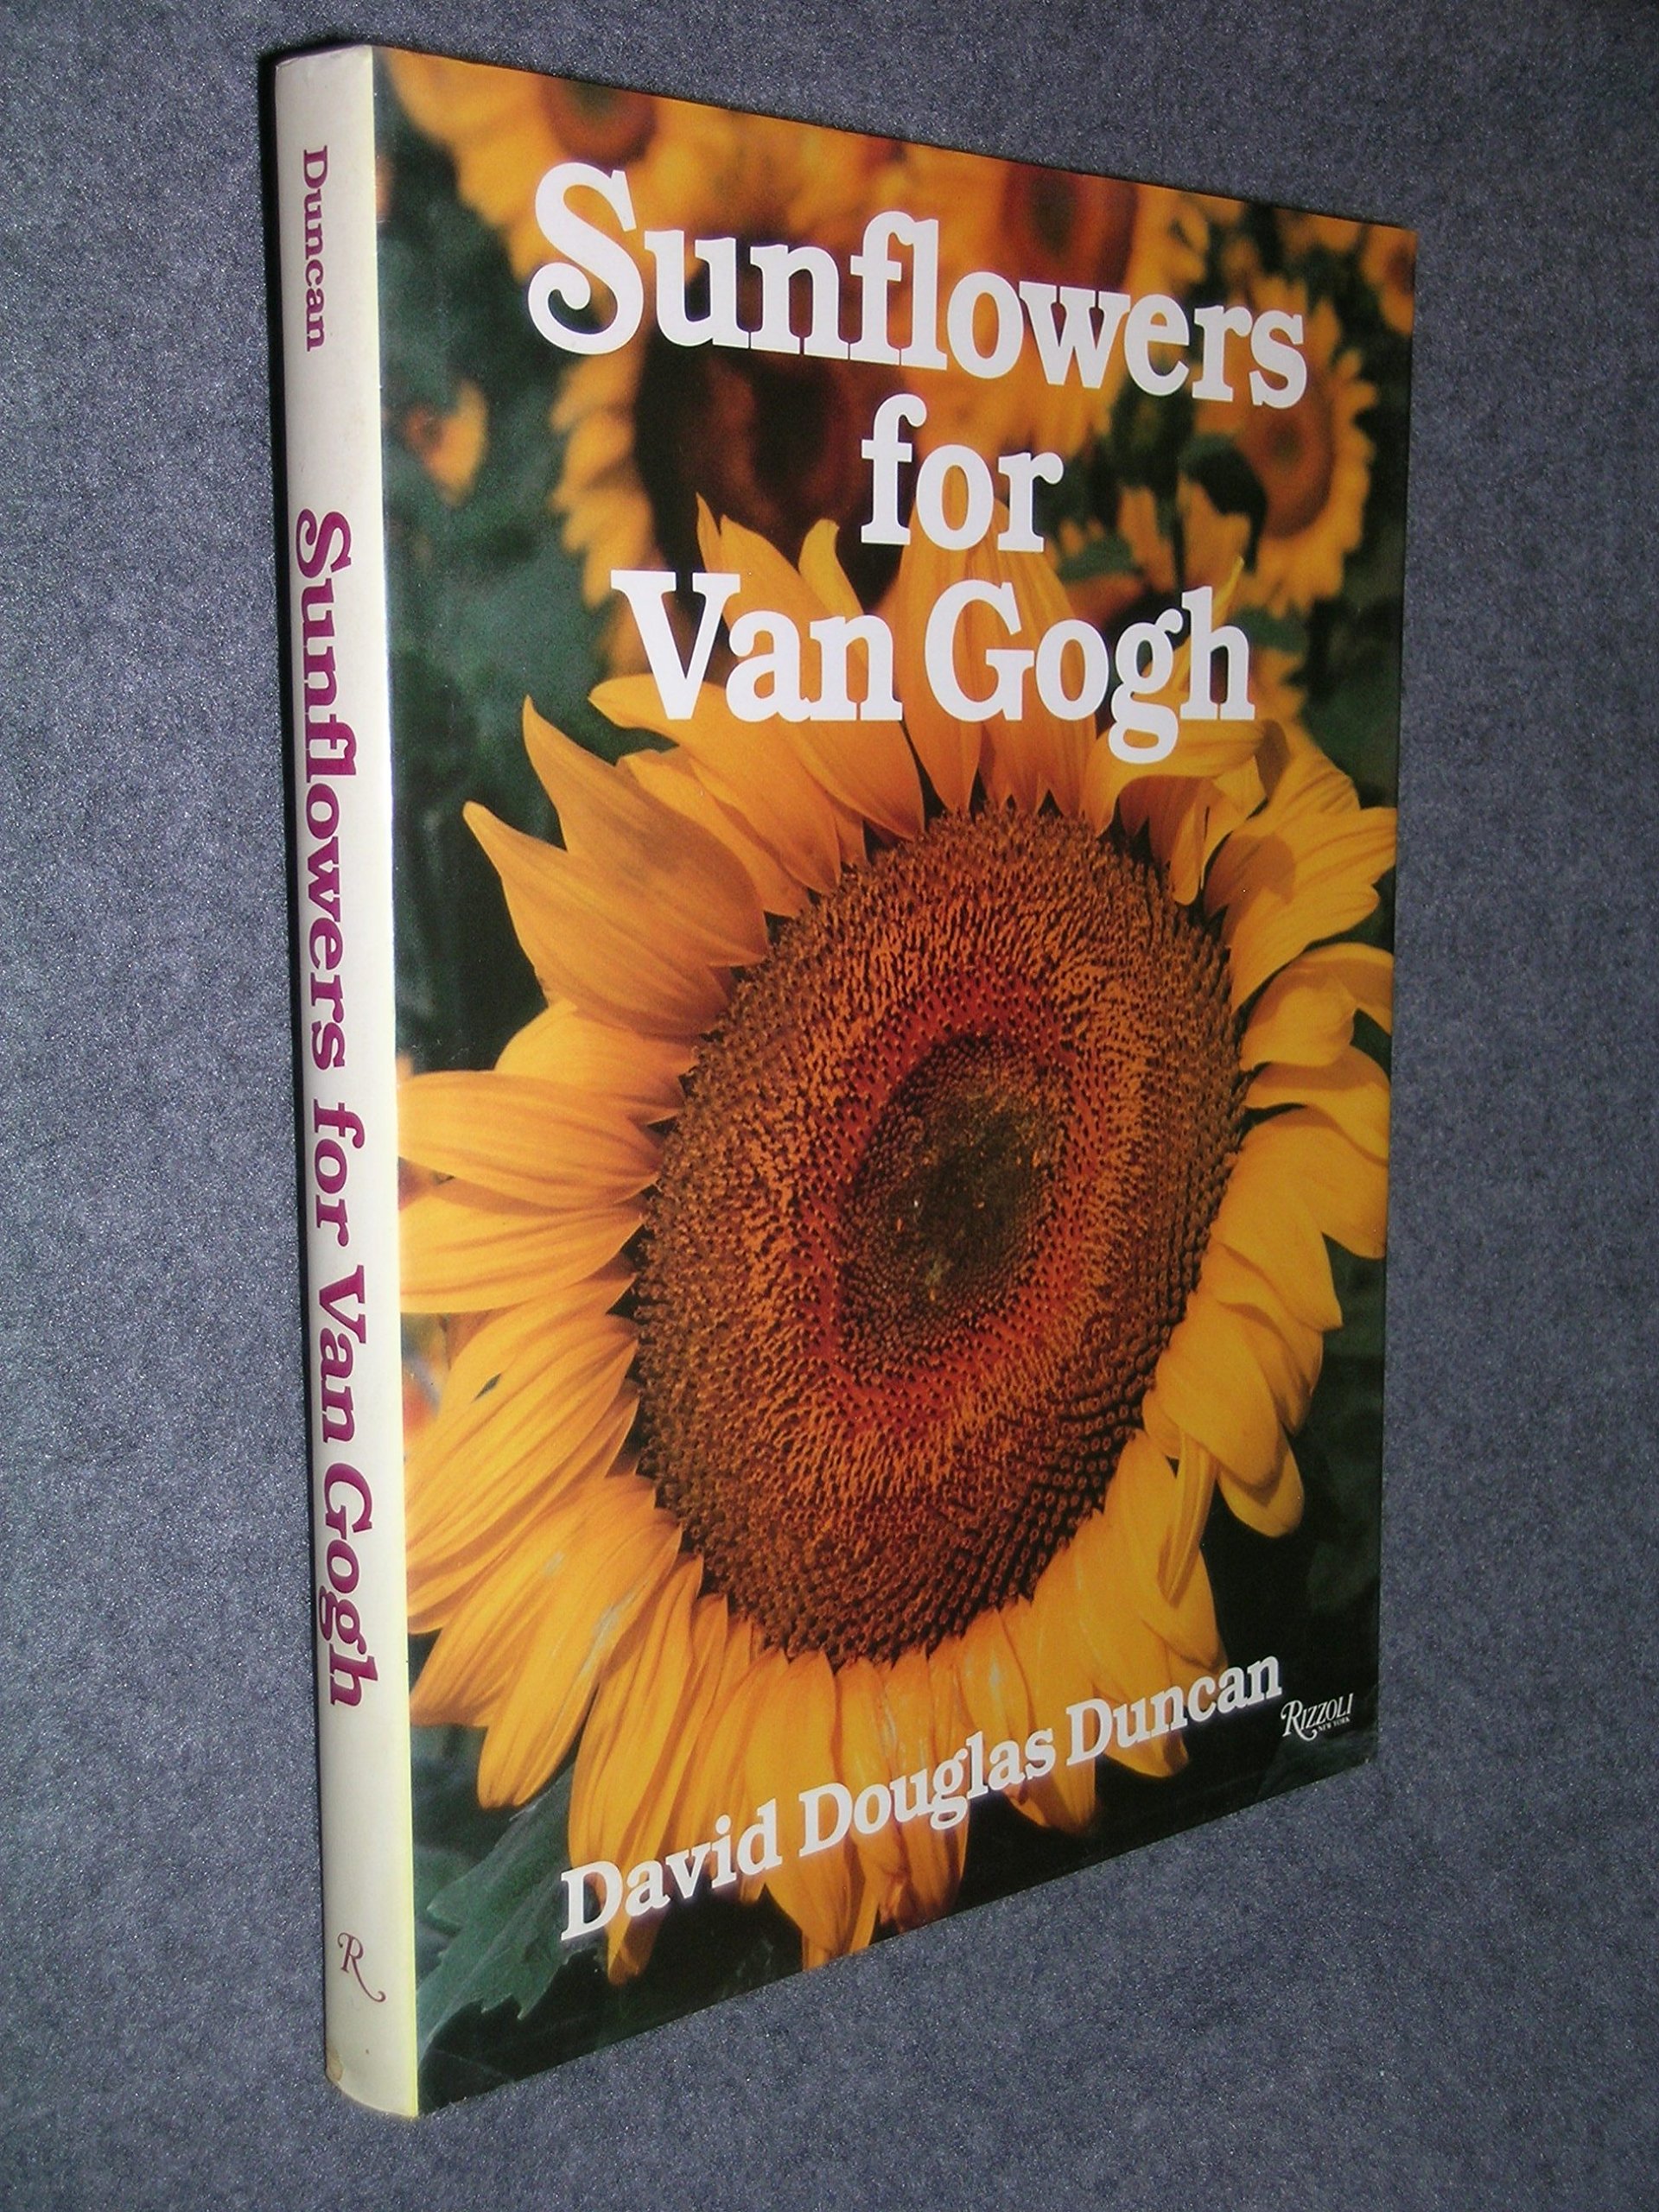 Sunflowers For Van Gogh: Douglas Duncan: 9780847807642: Amazon.com ...